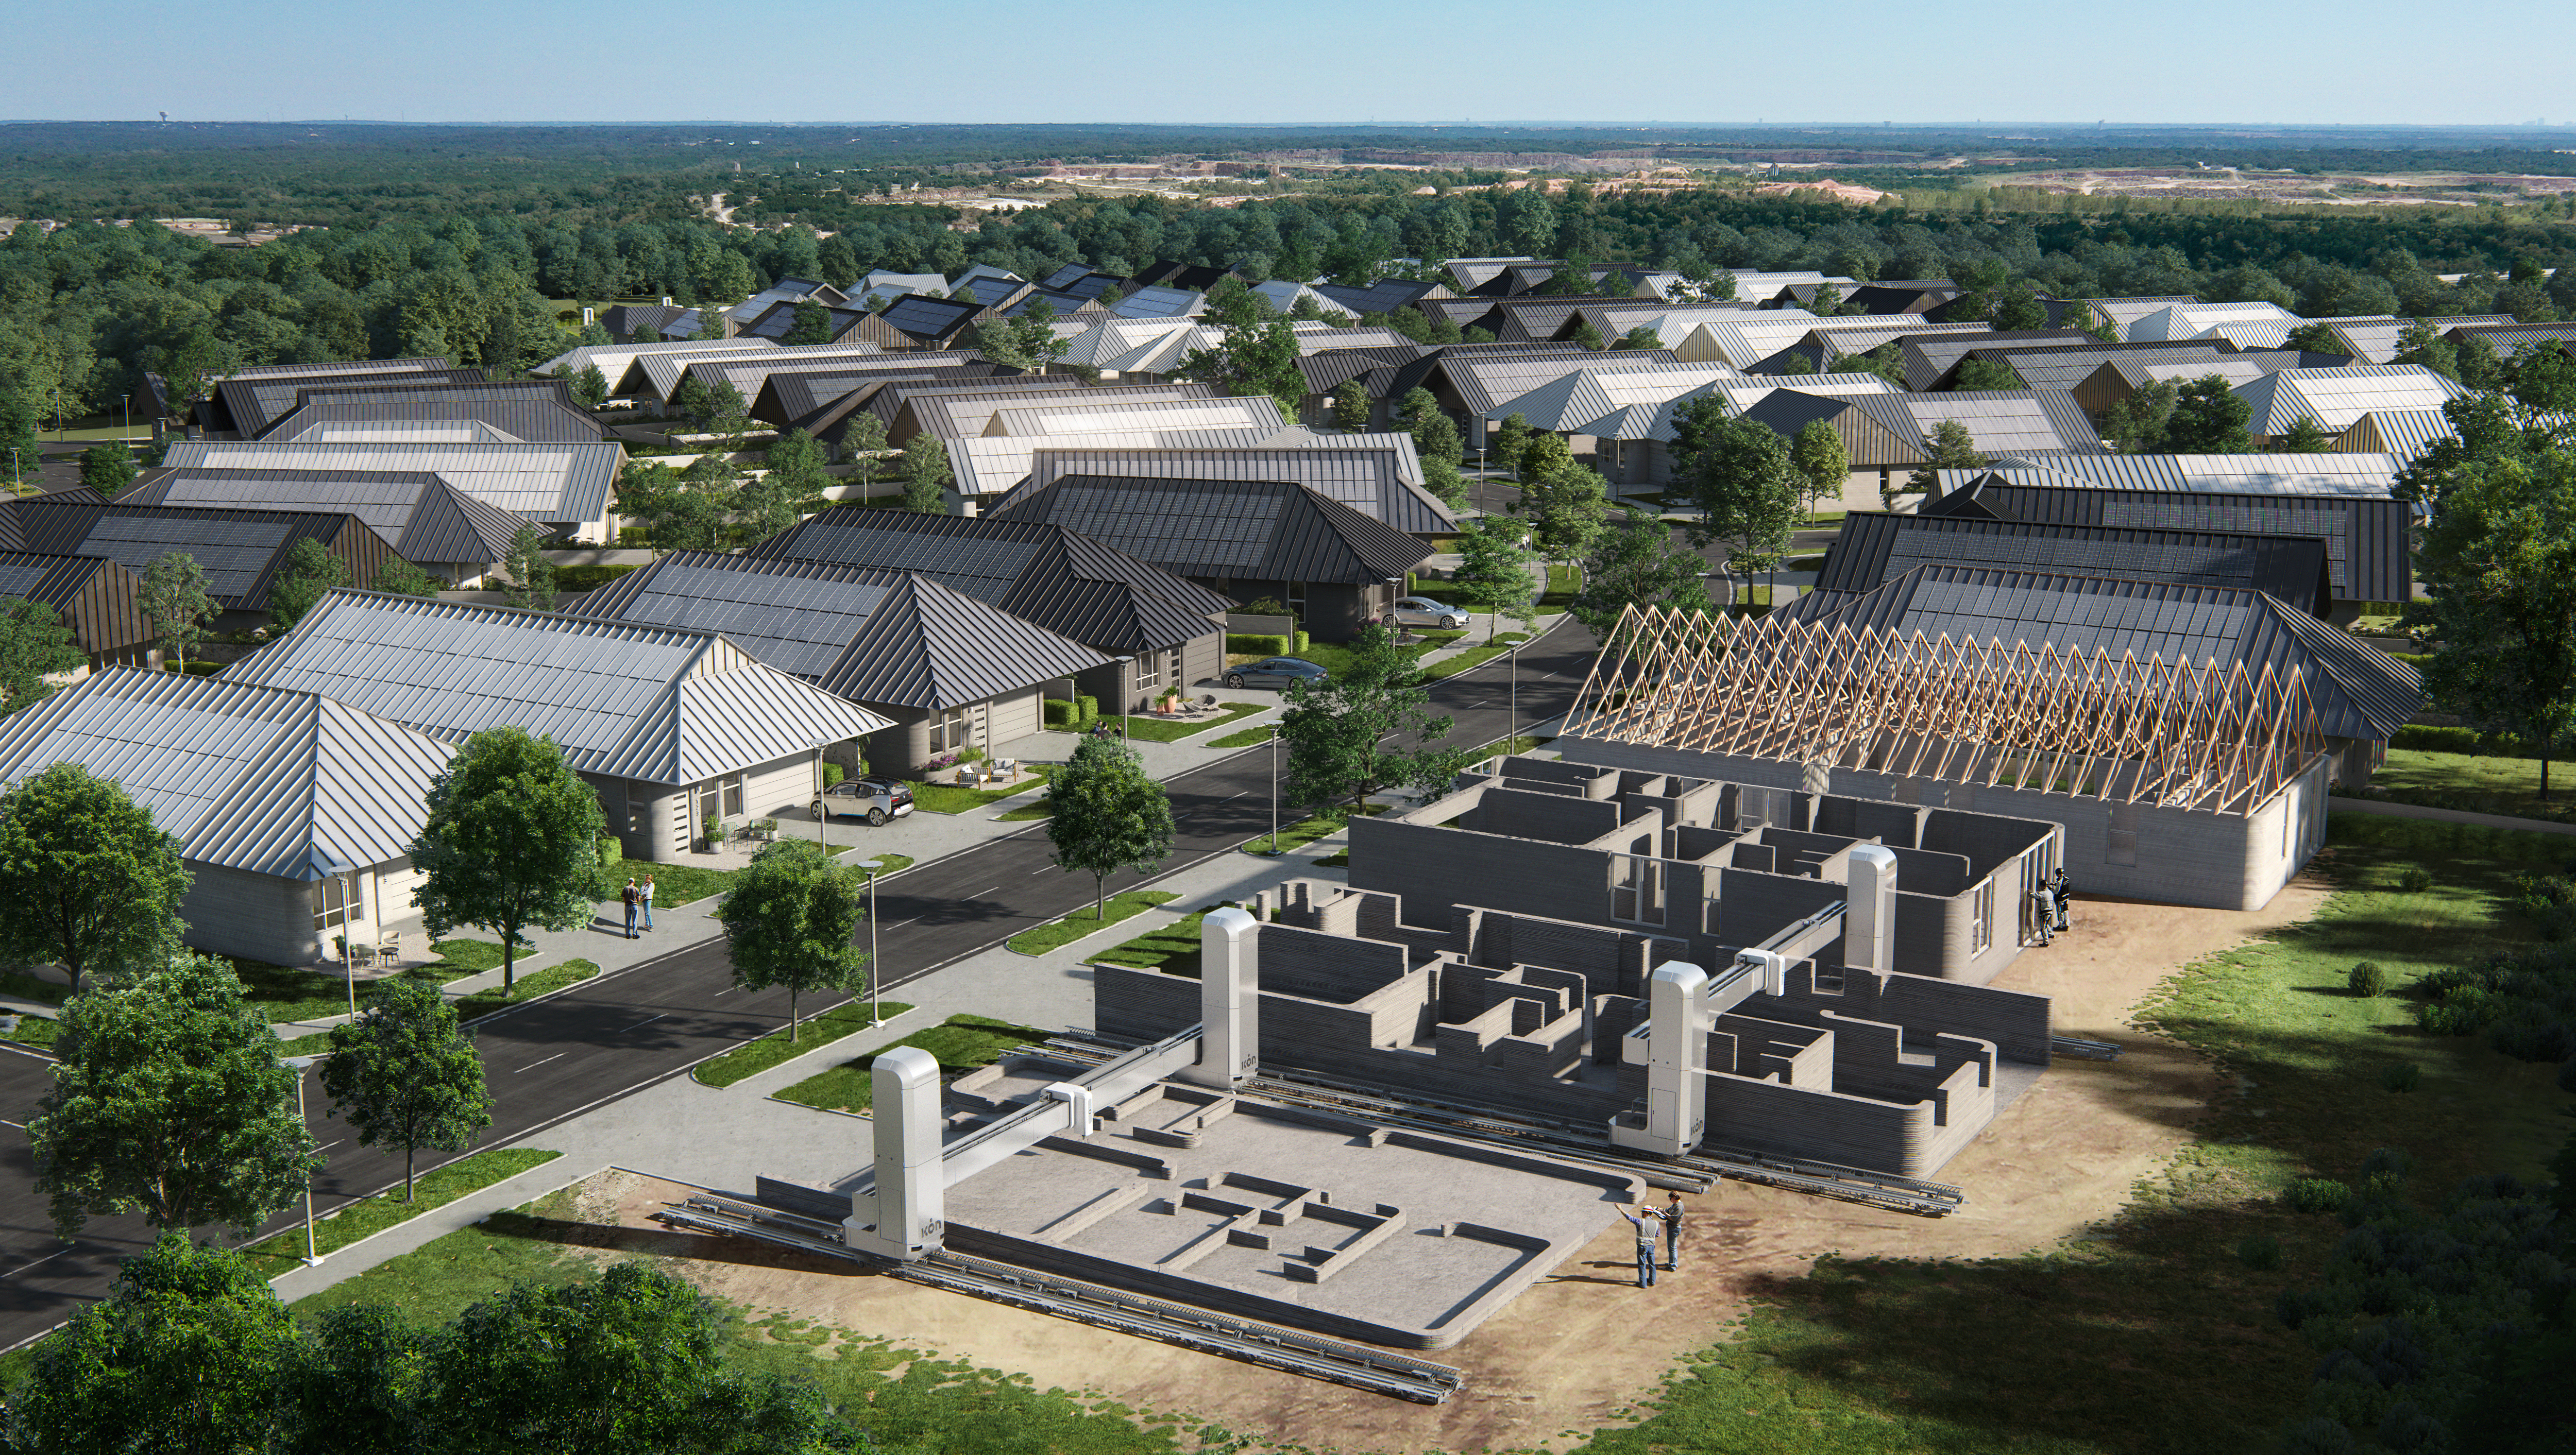 World's Largest 3D-Printed Neighborhood Set to Break Ground in Austin
Next Year